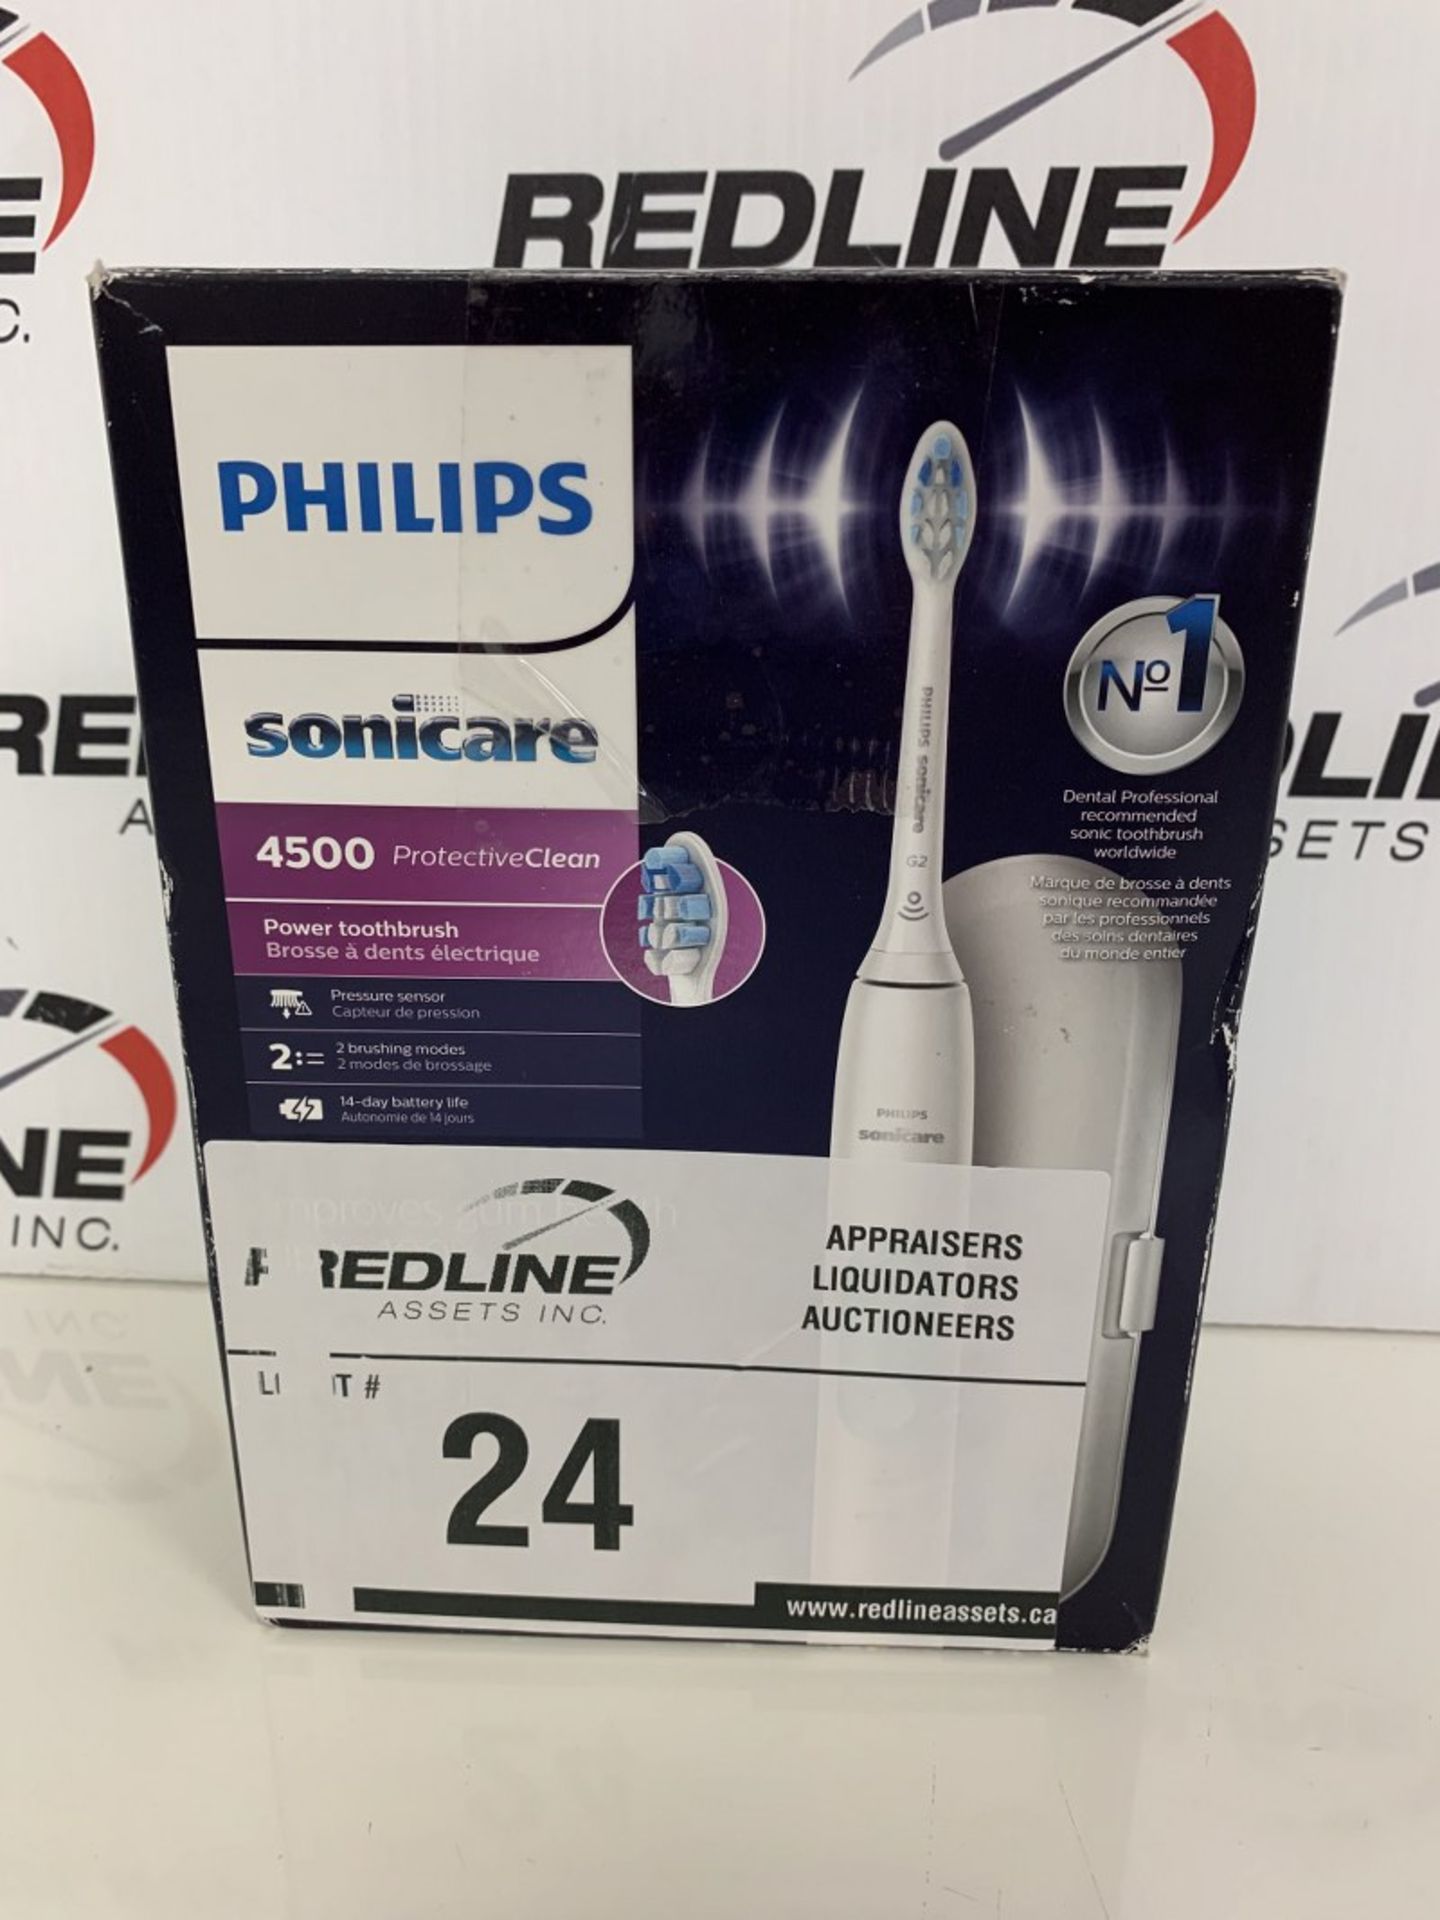 Philips - Sonicare 4500 - Power Toothbrush